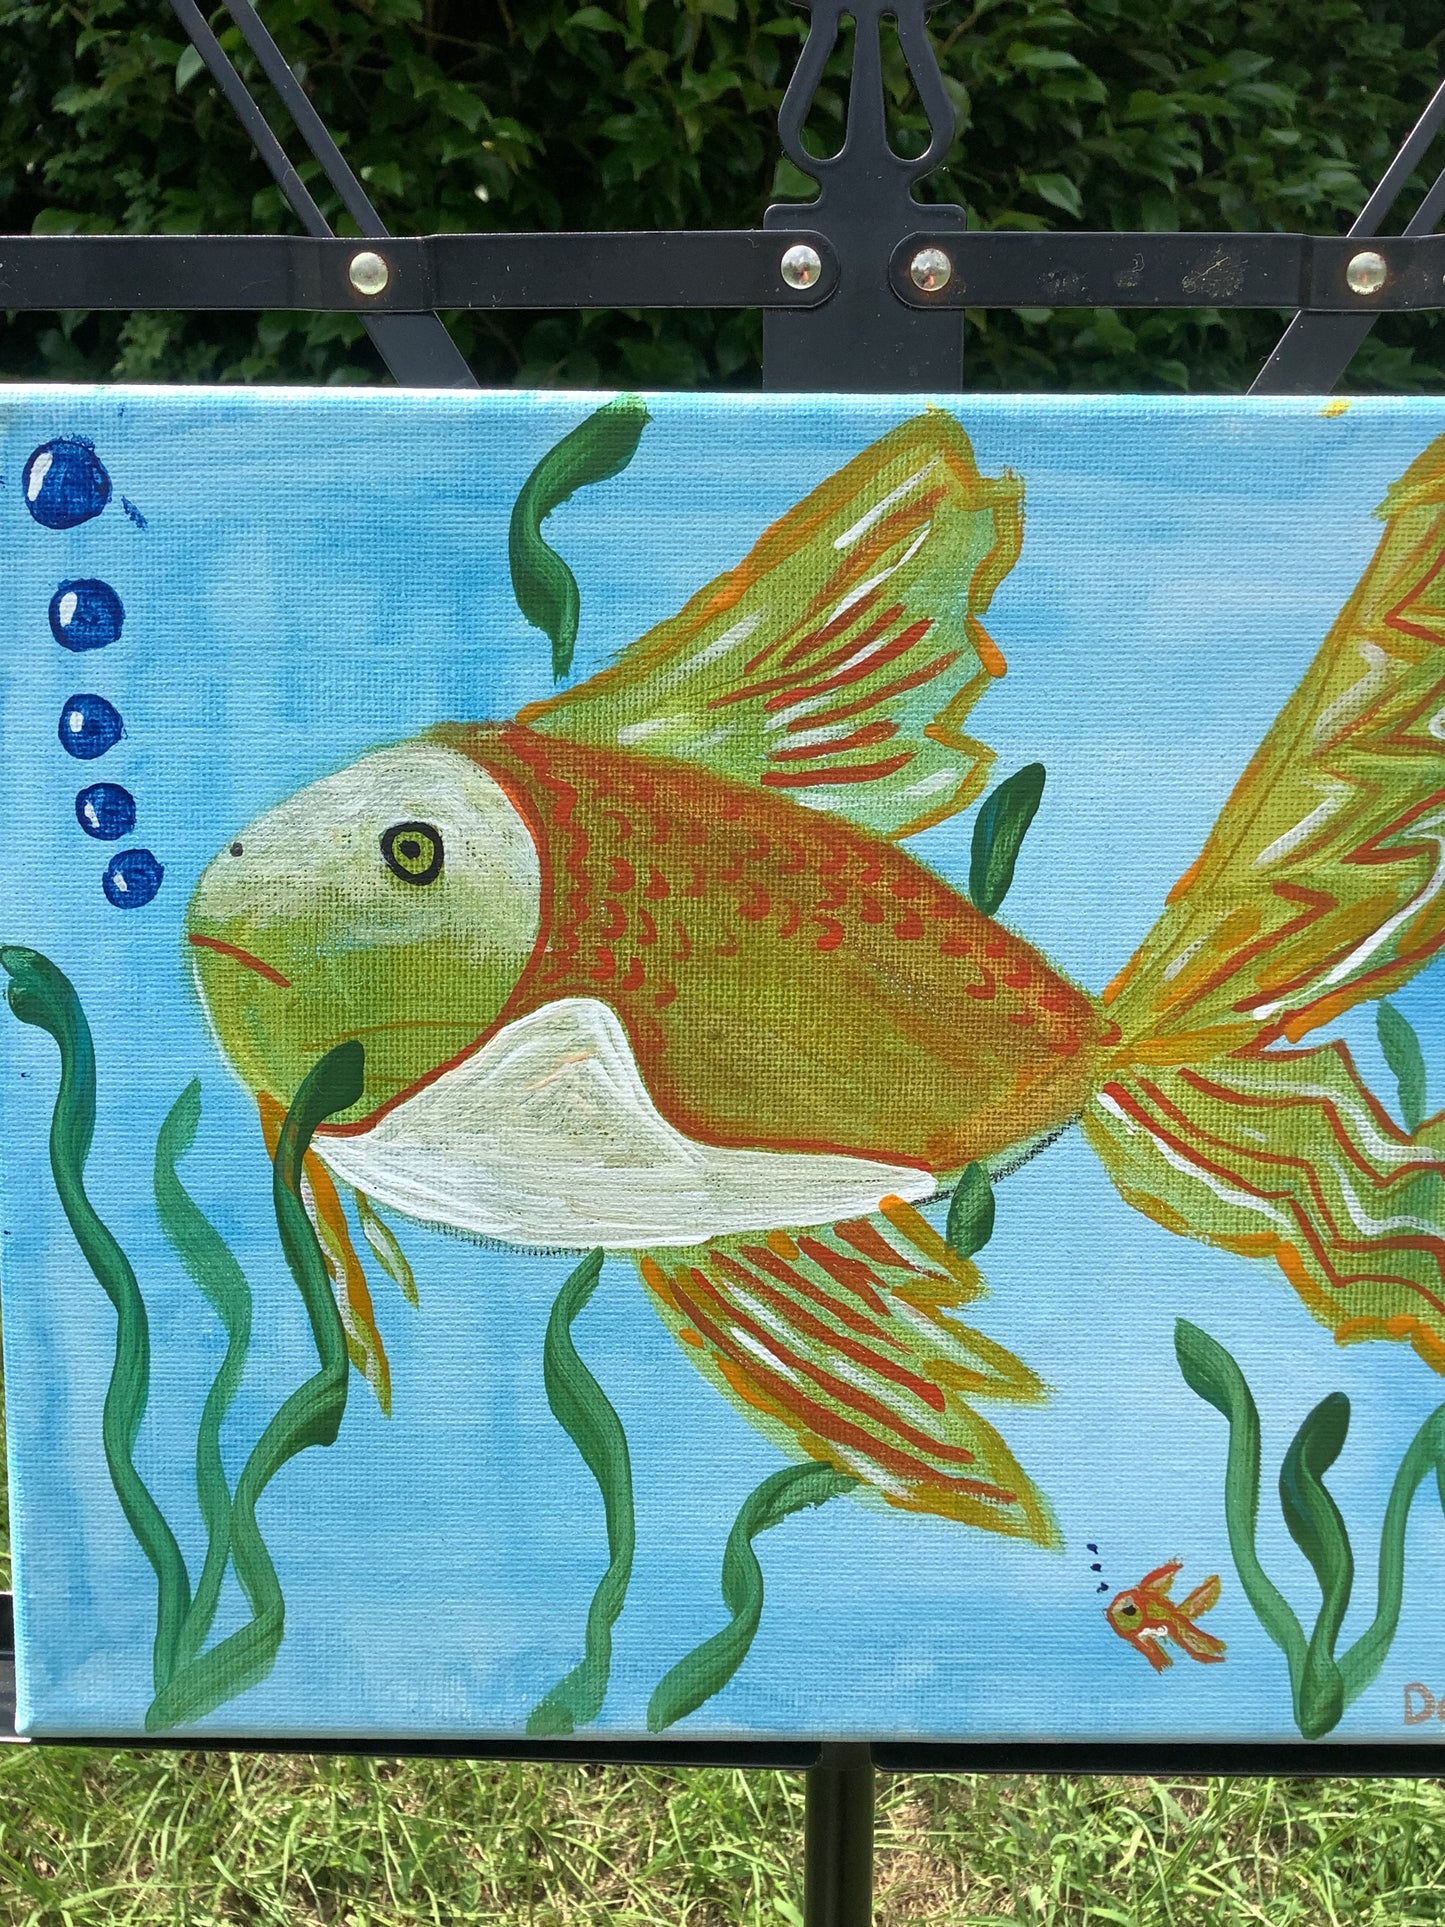 Mr. Fish 10" x 8"